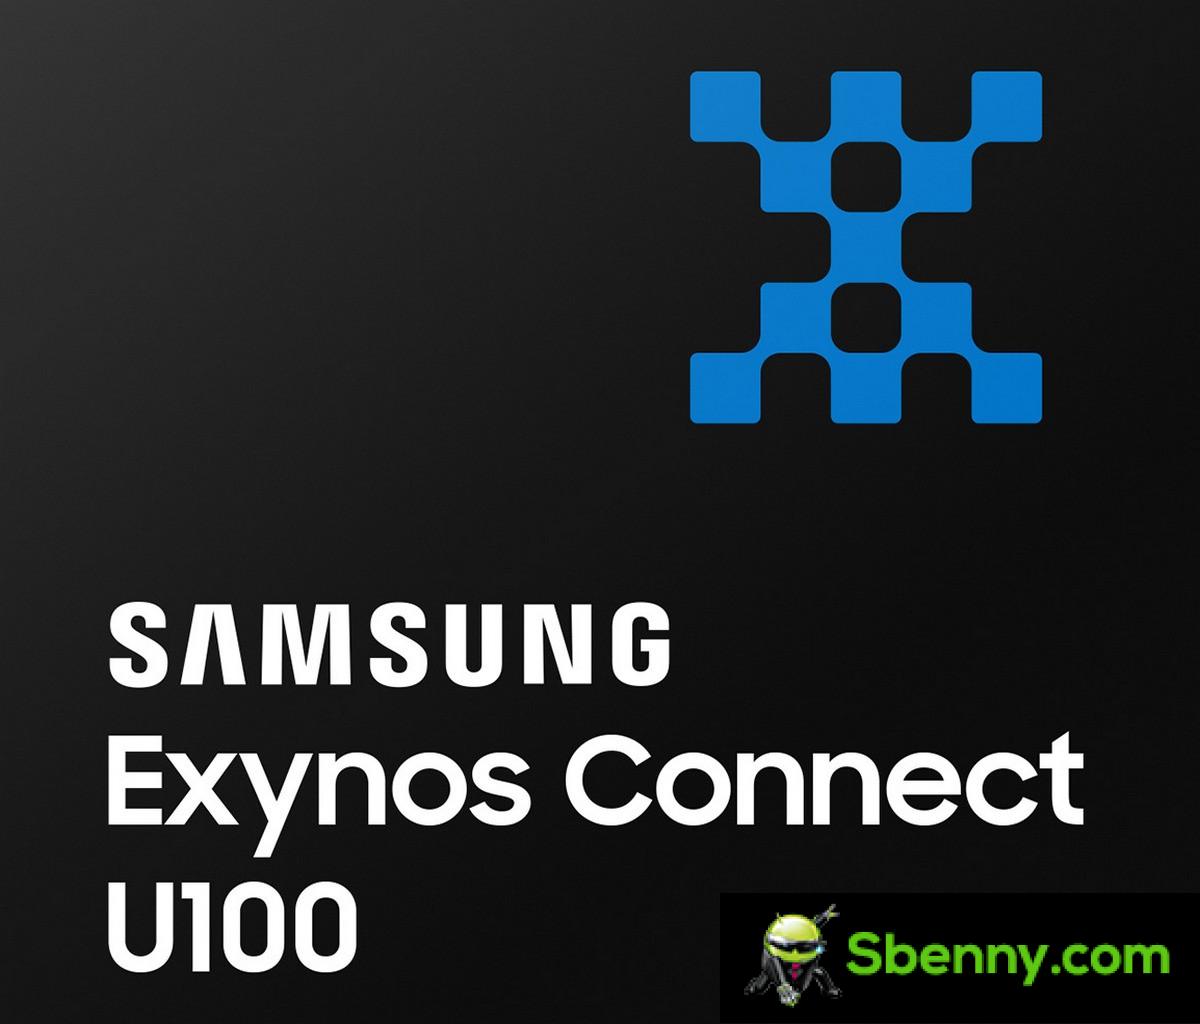 Samsung lança Exynos Connect U100, seu chipset ultra banda larga